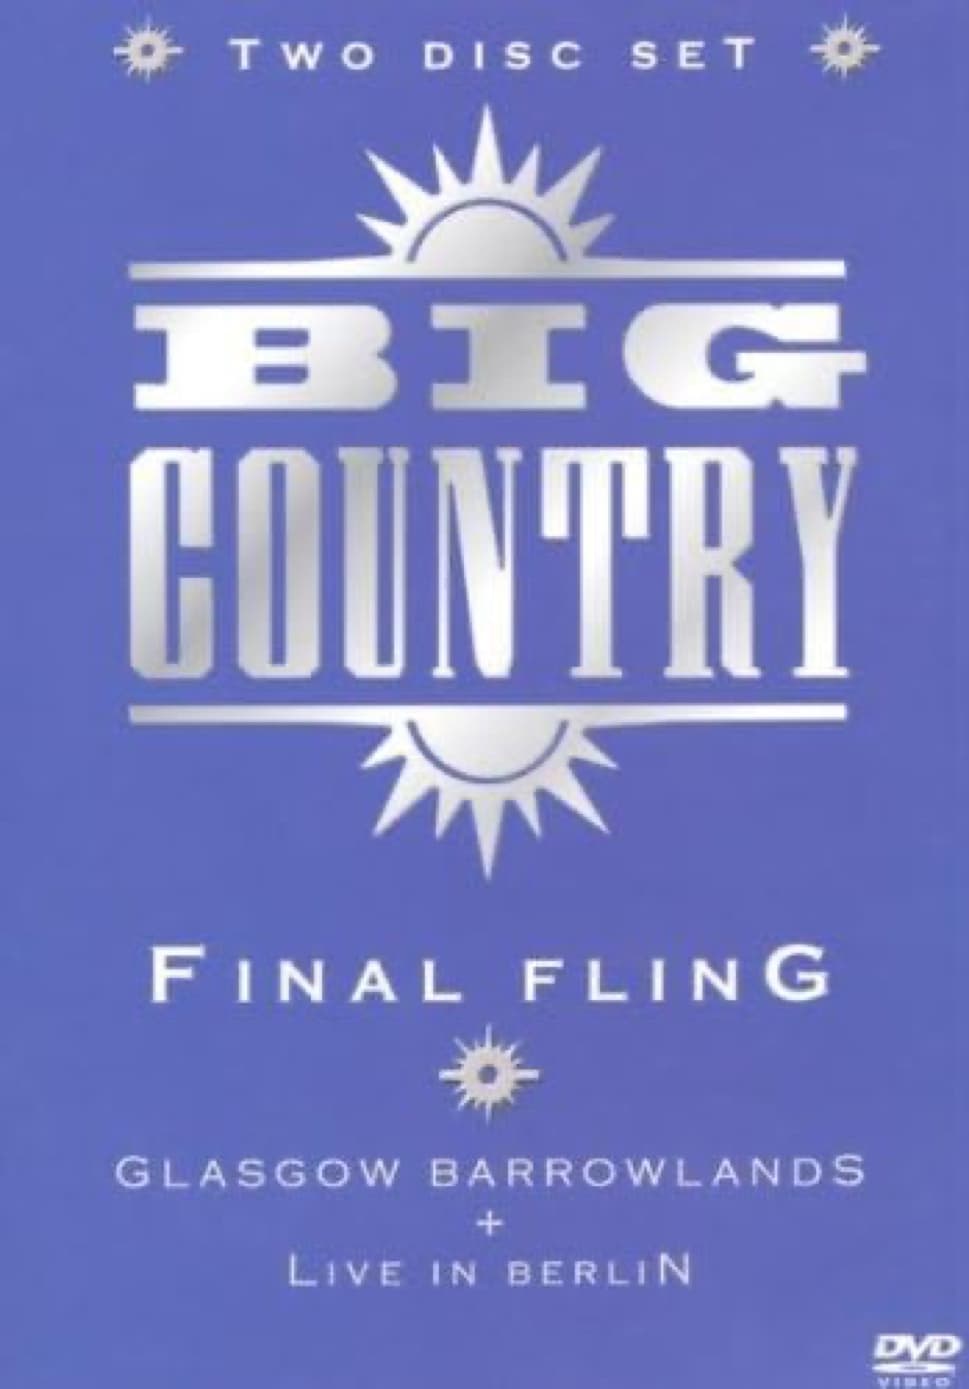 Big Country: Final Fling